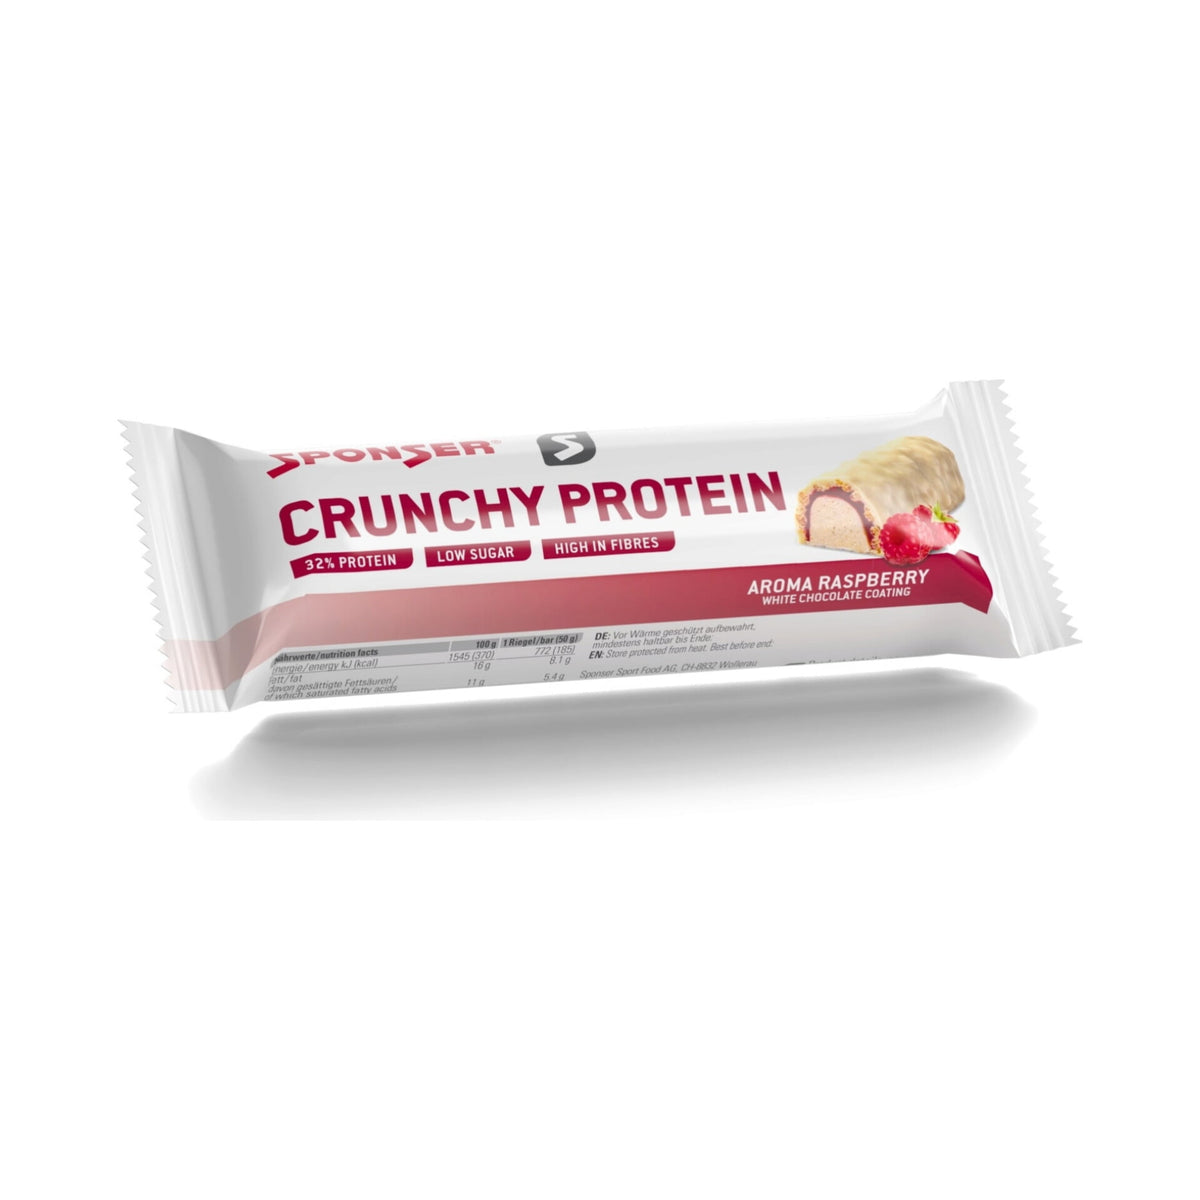 Crunchy protein bar